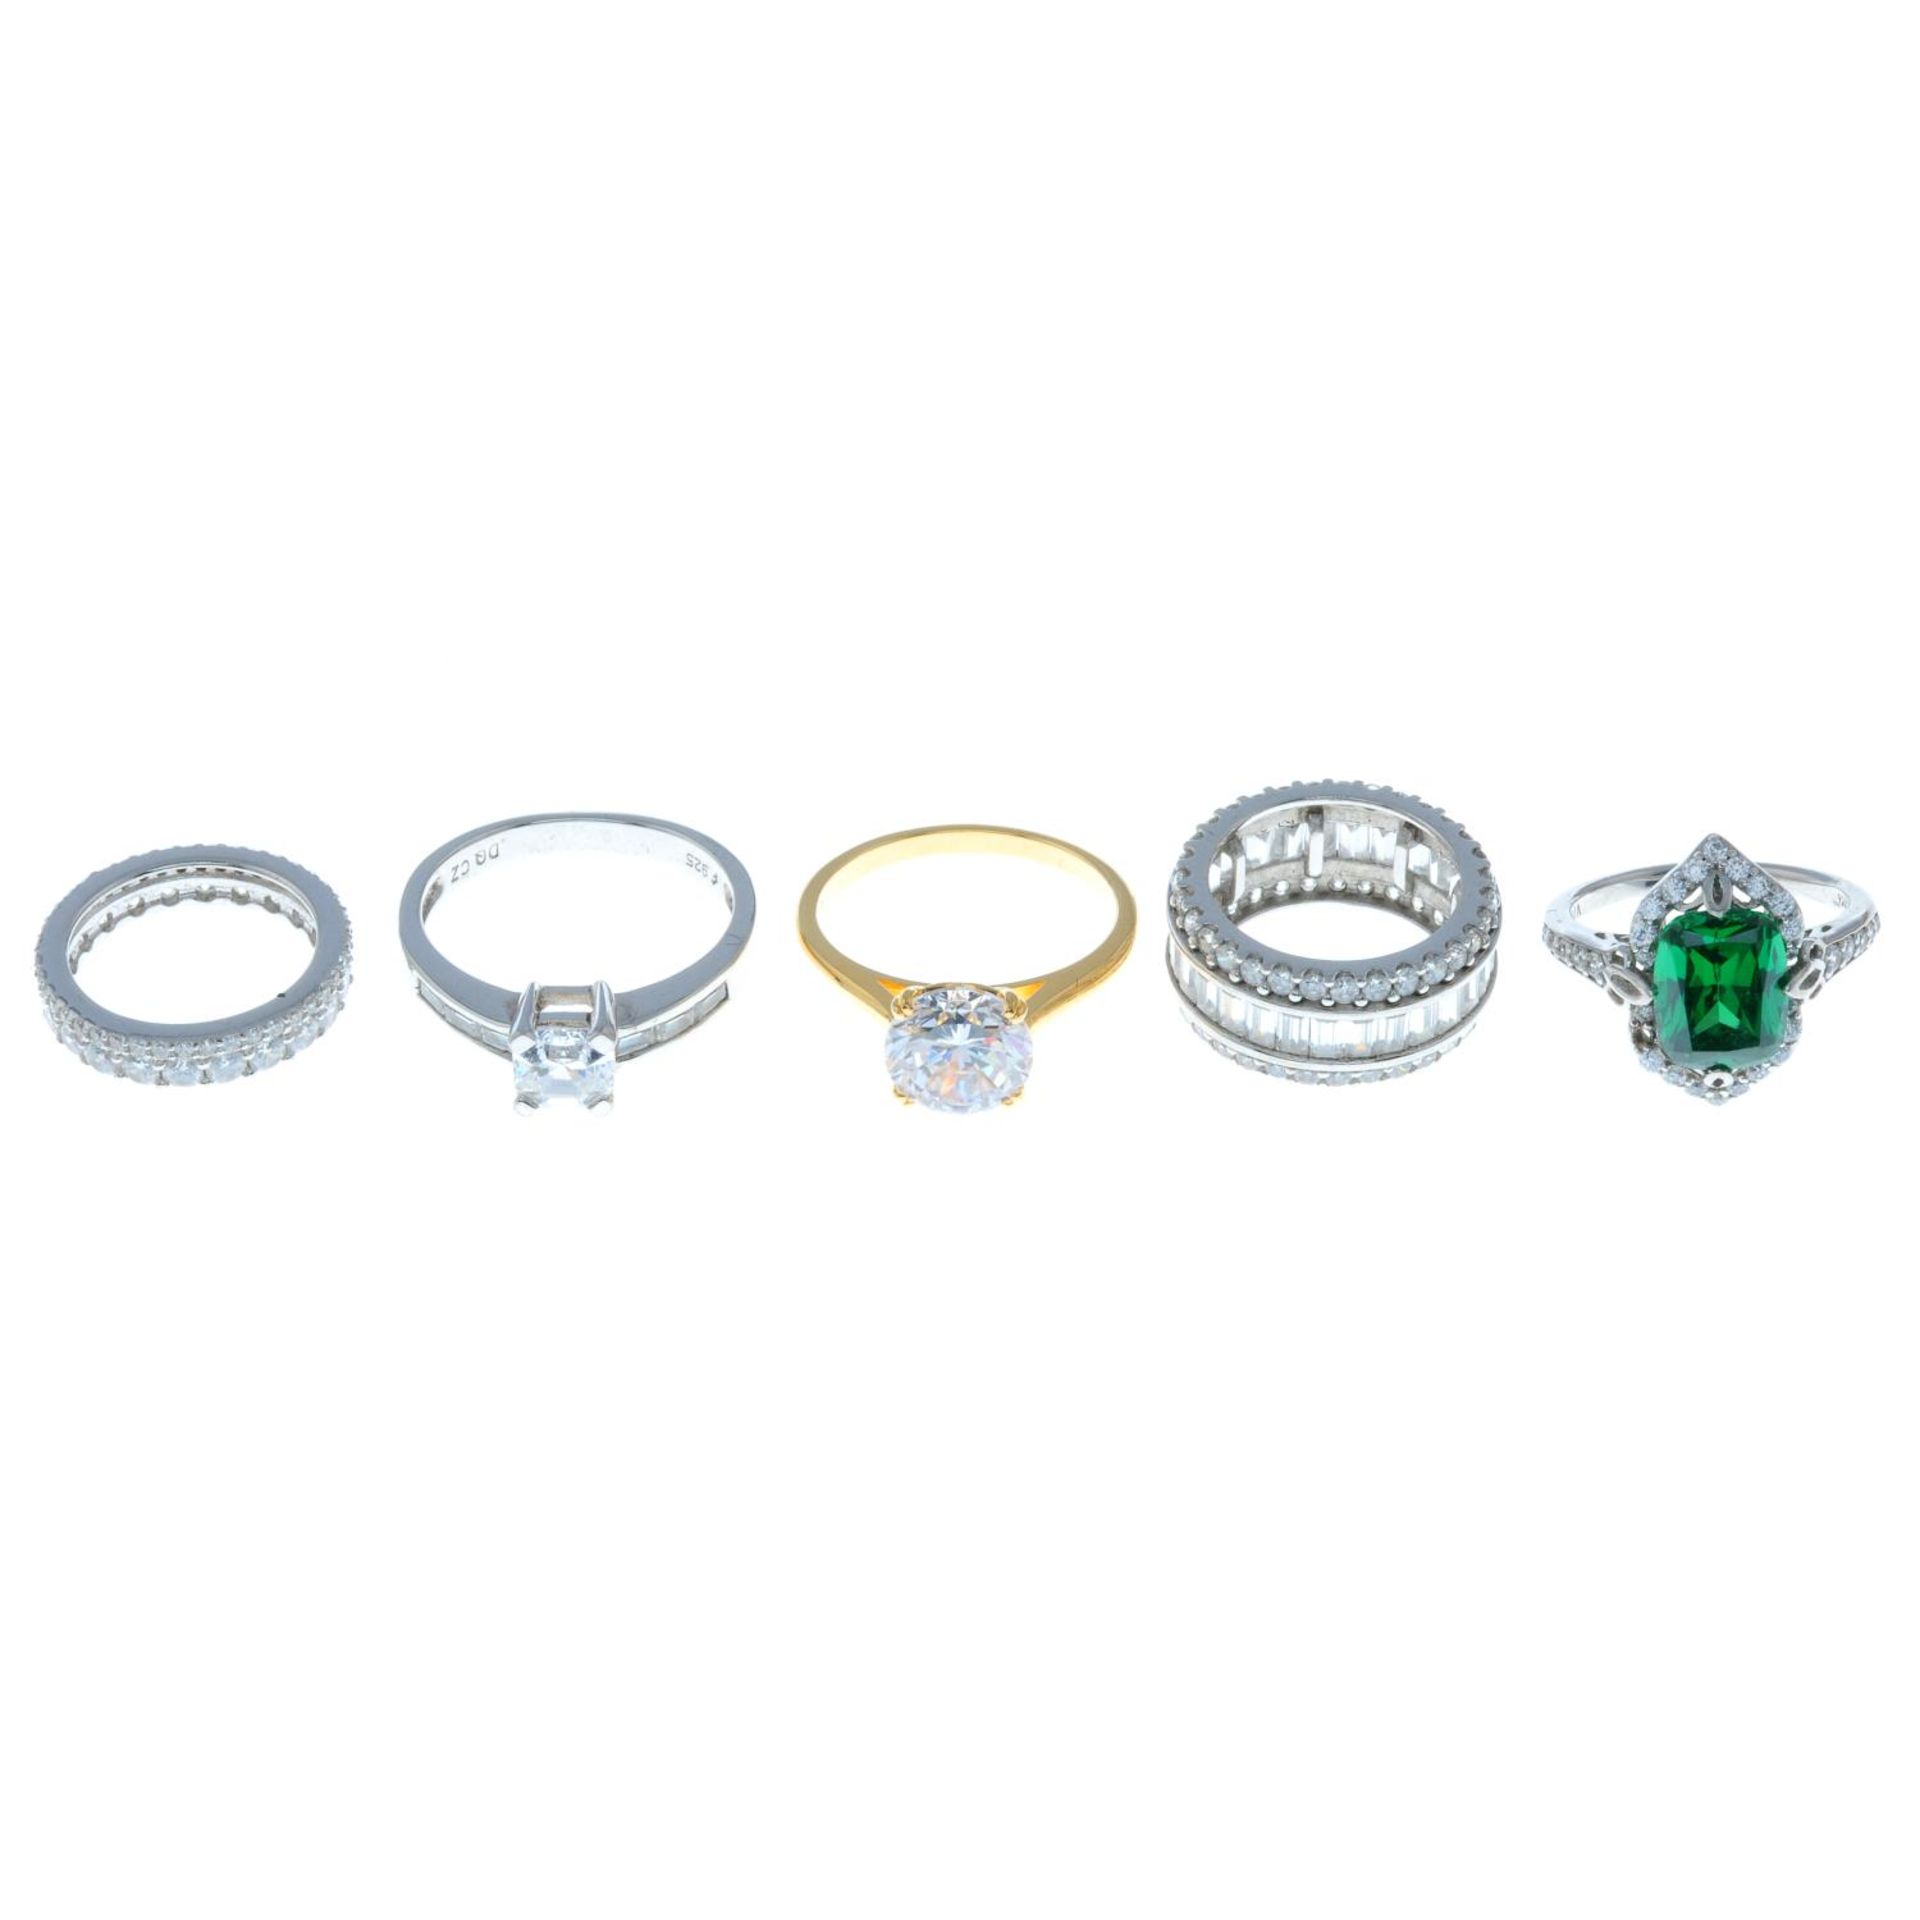 Eleven cubic zirconia and gem-set rings, - Bild 3 aus 3